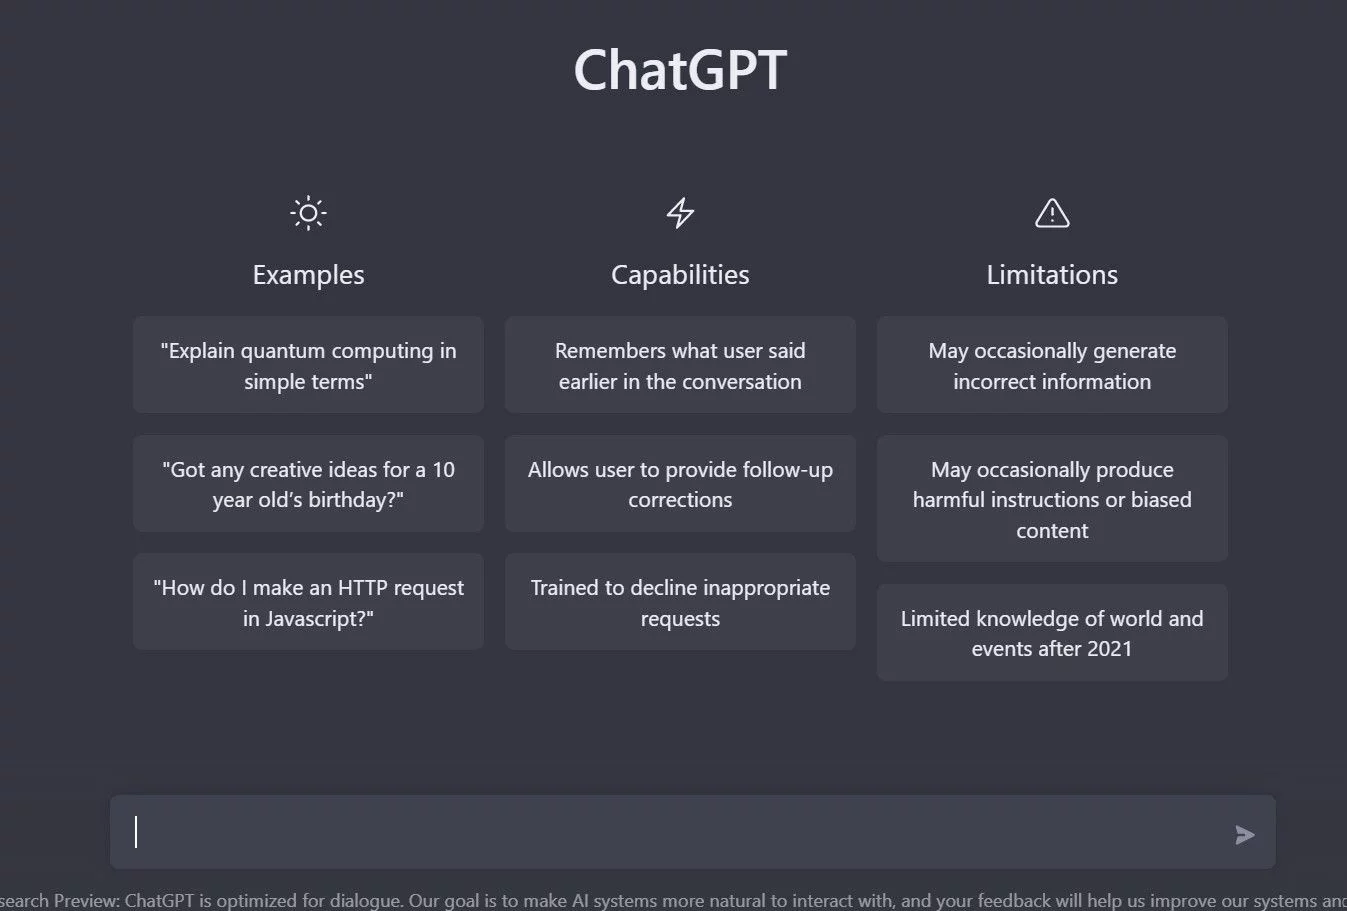  ChatGPT optimizes language models for dialogue